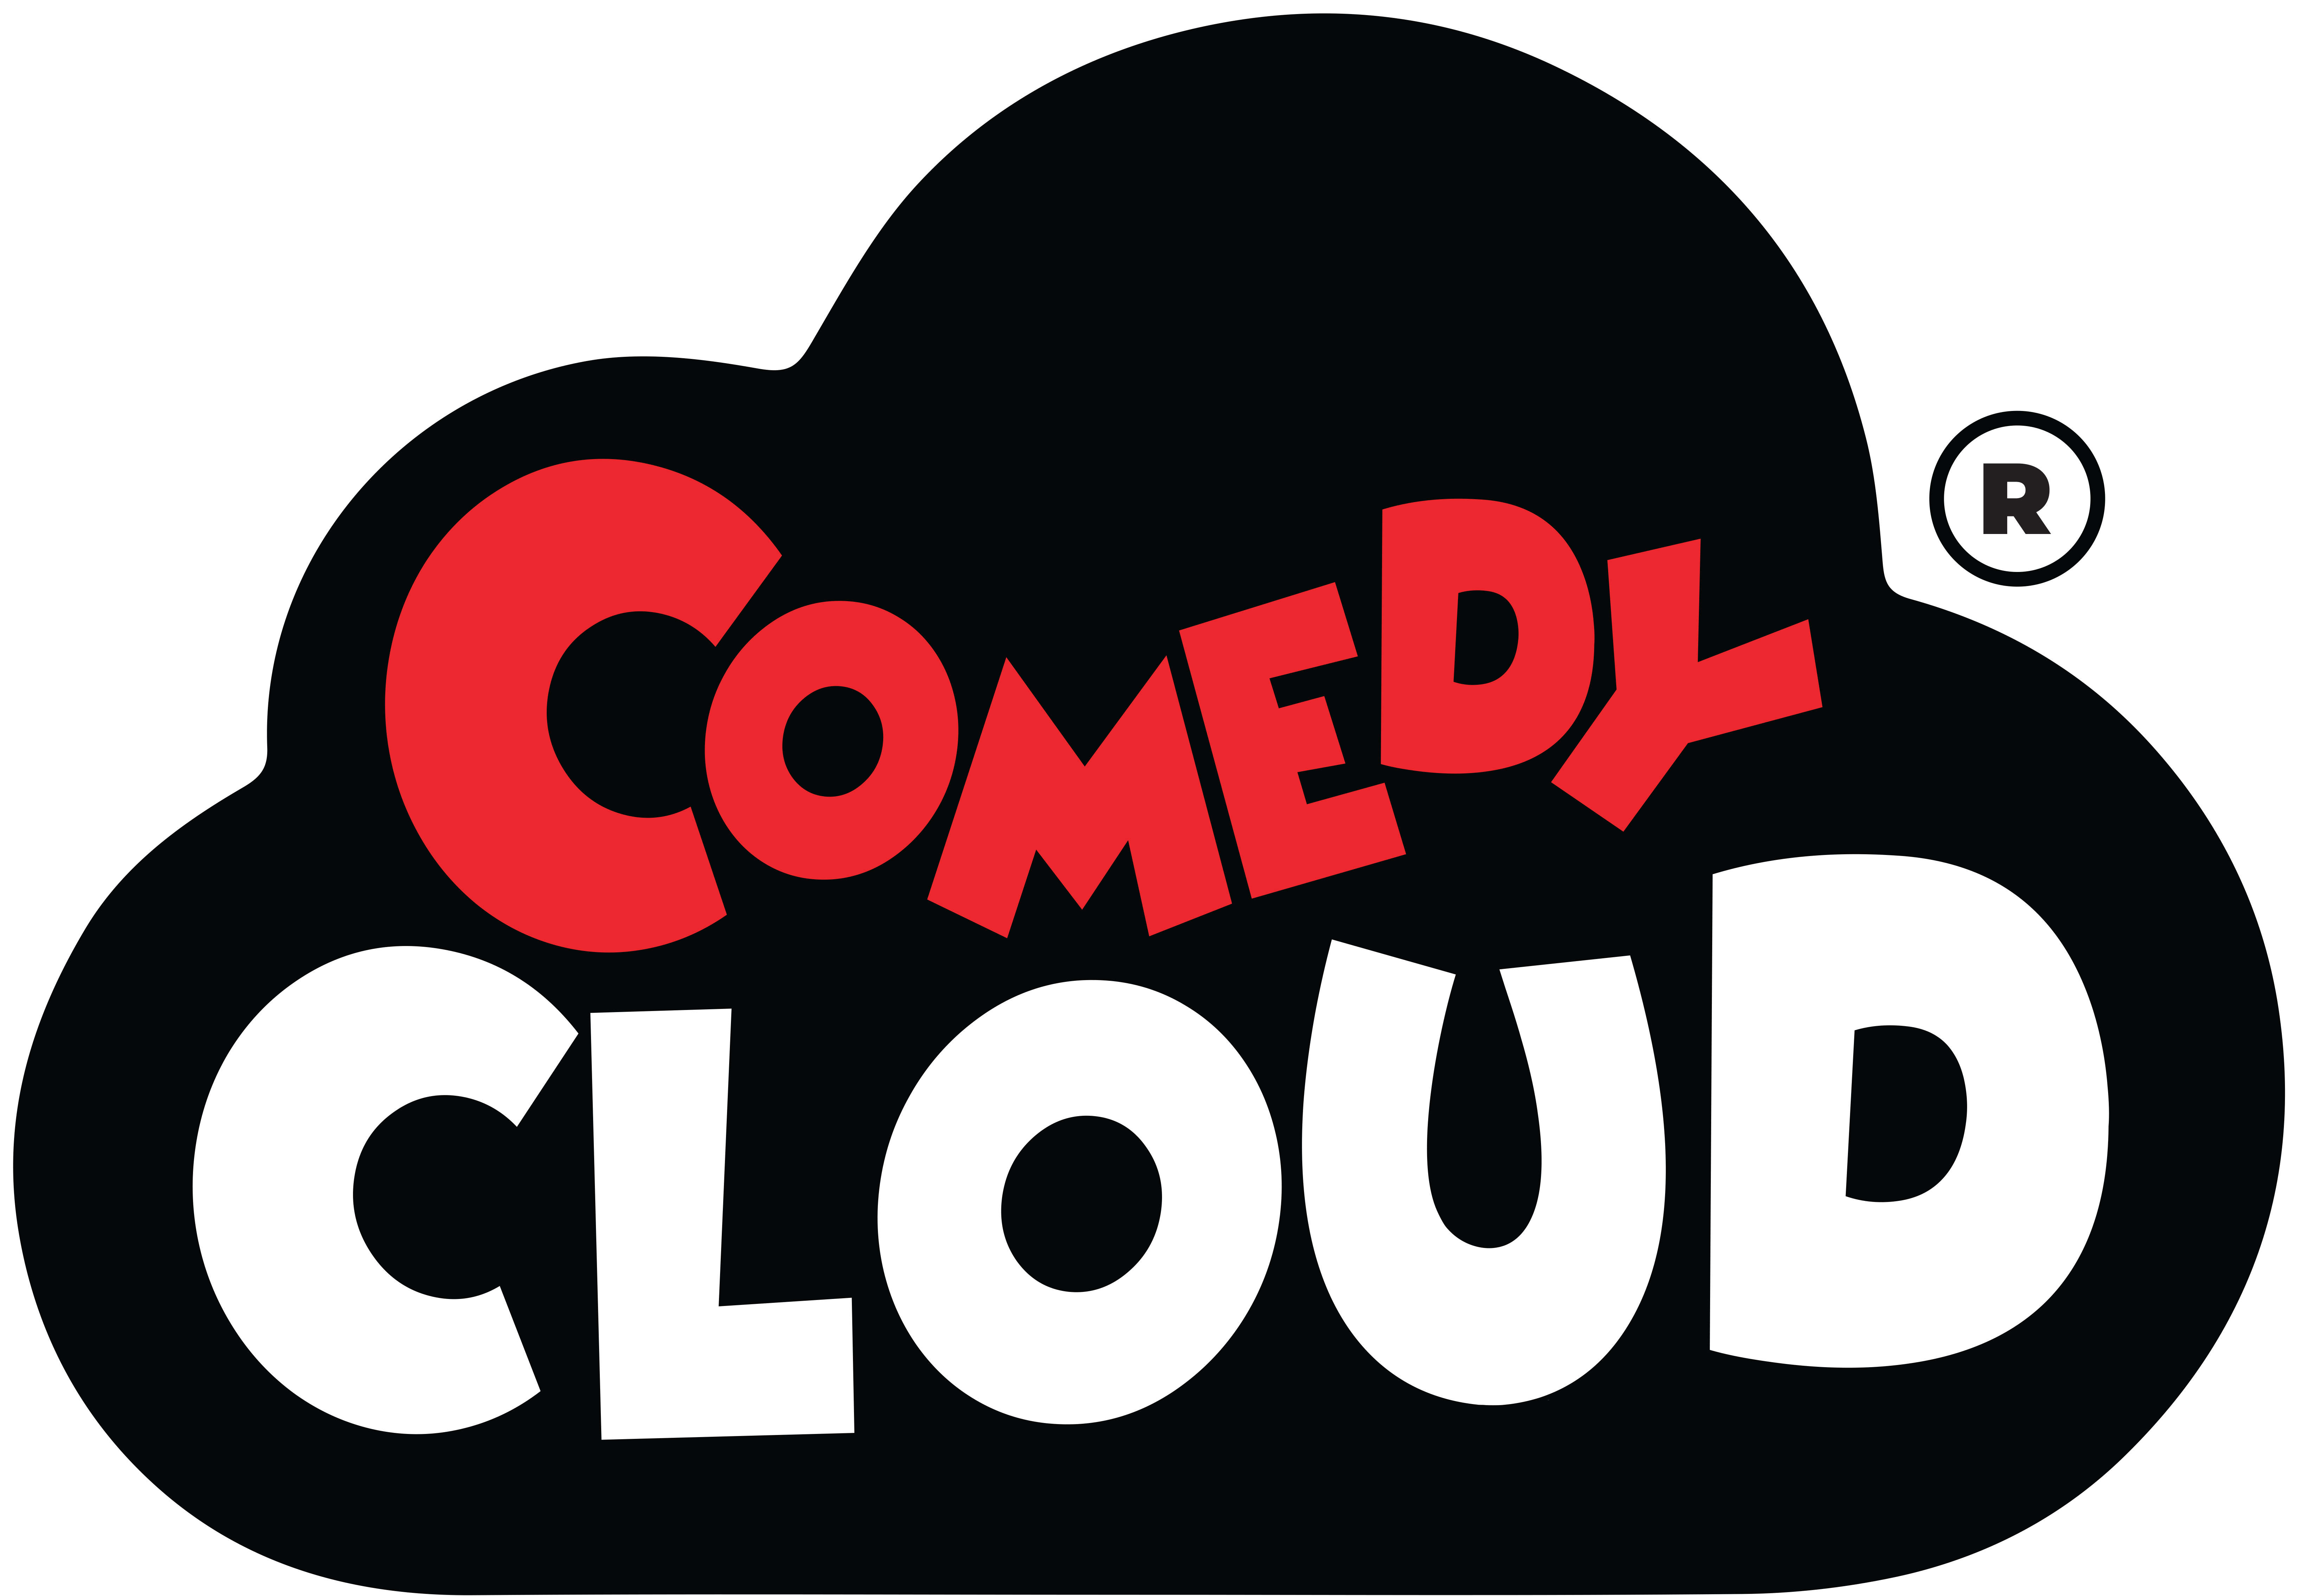 Comedy Cloud